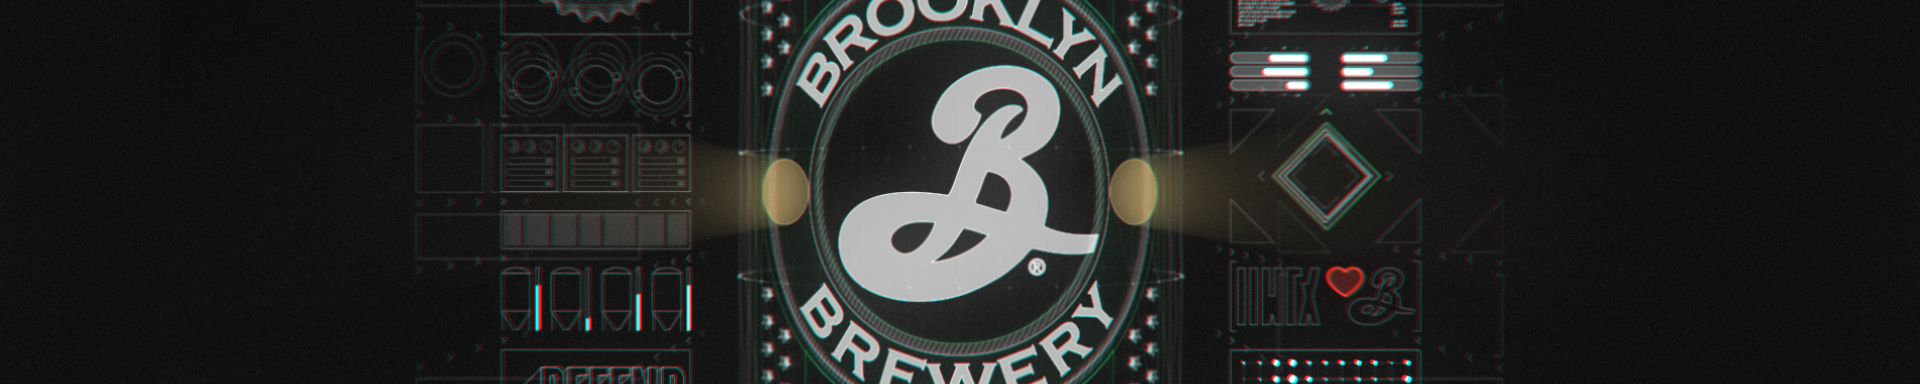 Brooklyn Brewery homage